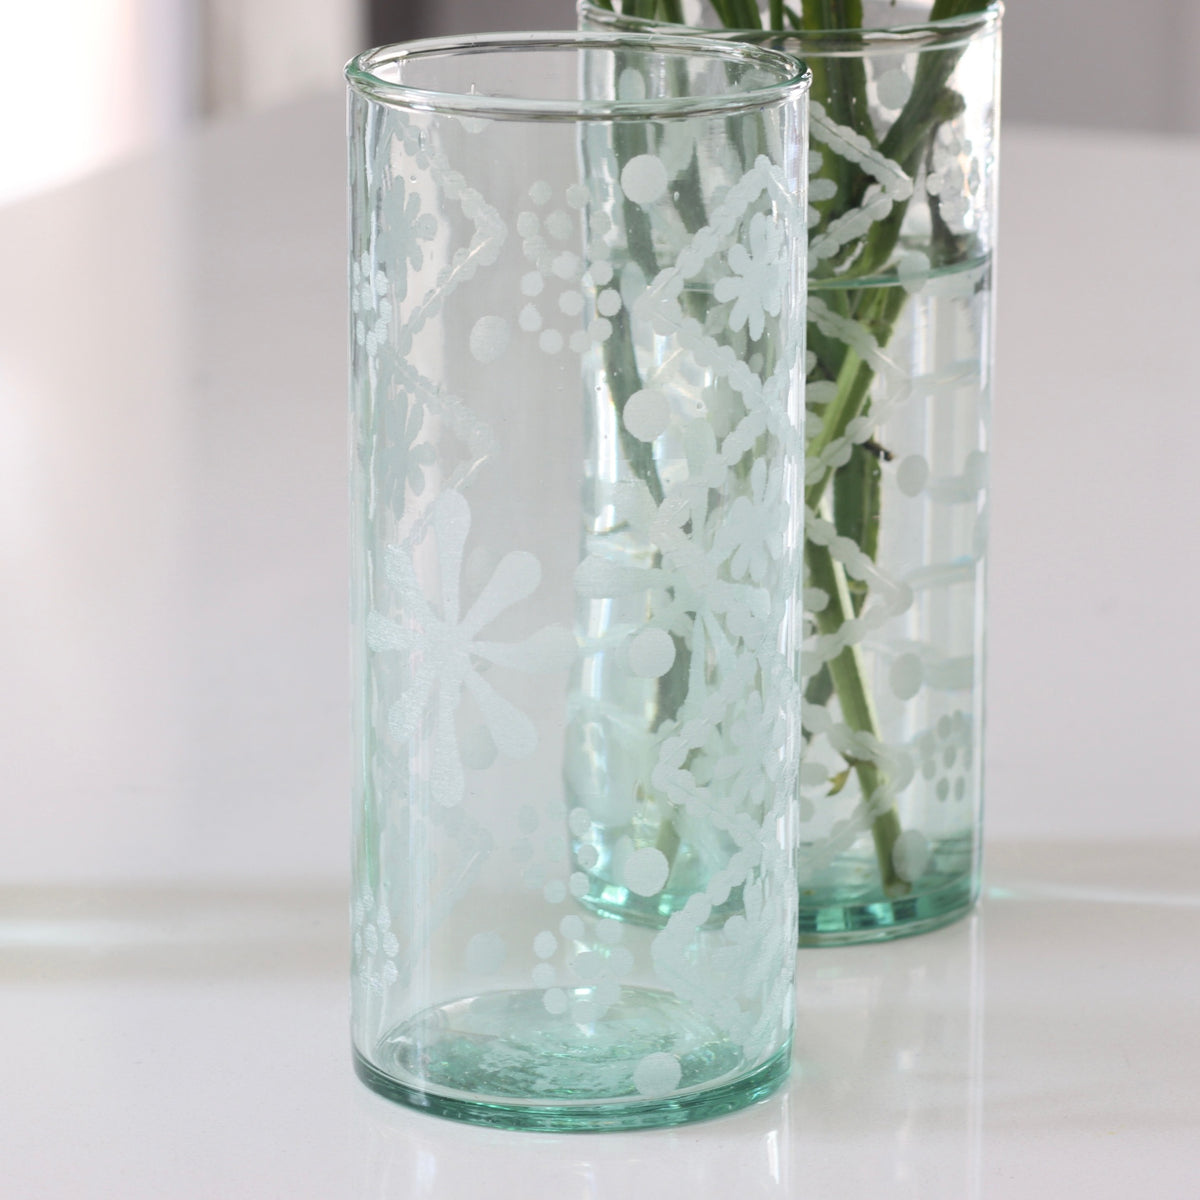 Secret Garden Etched Recycled Glass Vase - Large - Holistic Habitat 